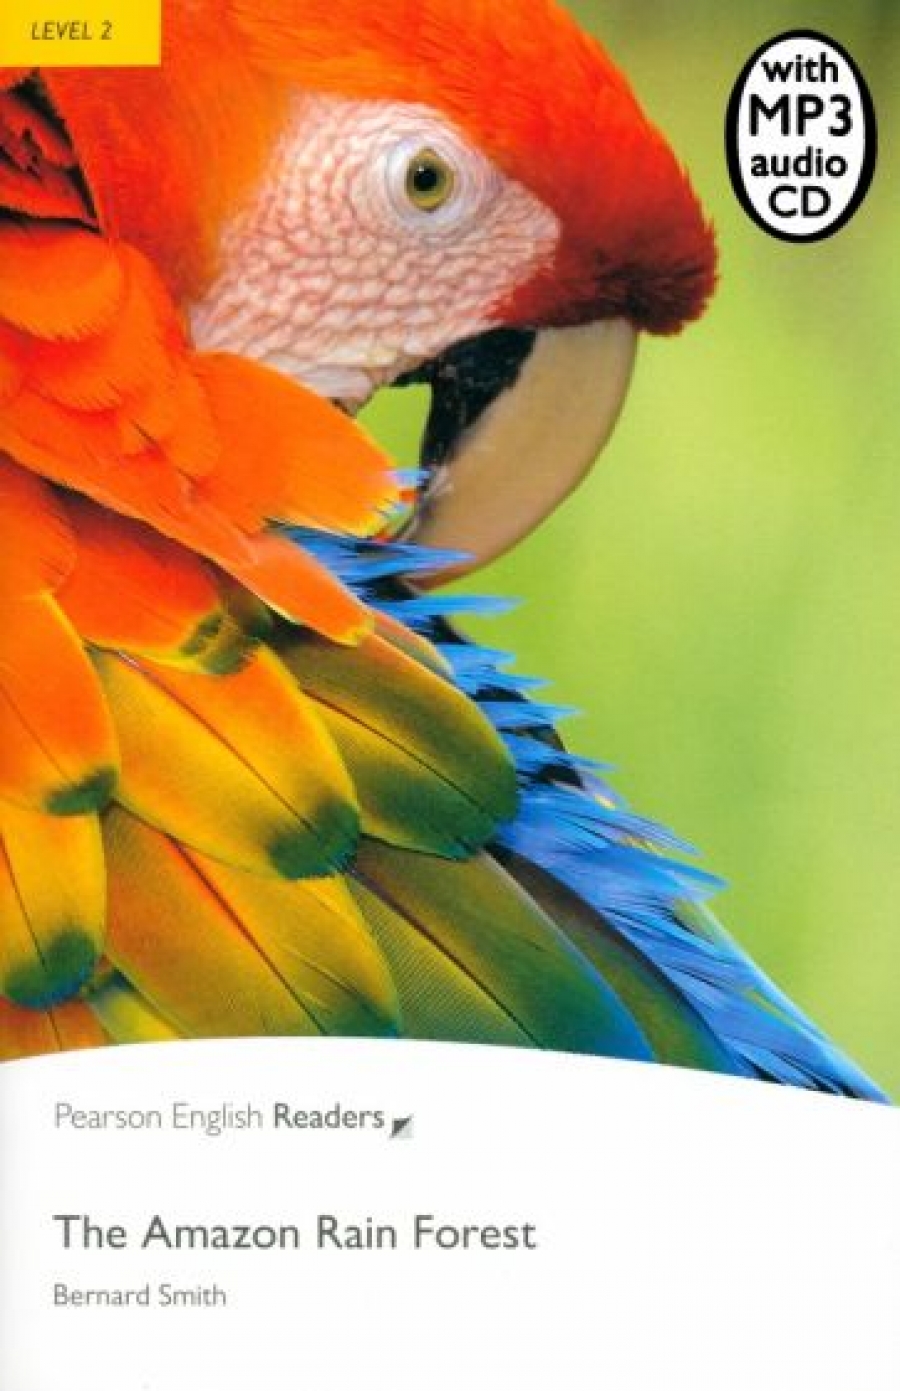 Bernard Smith Penguin readers 2: The Amazon Rainforest (with Audio MP3) 